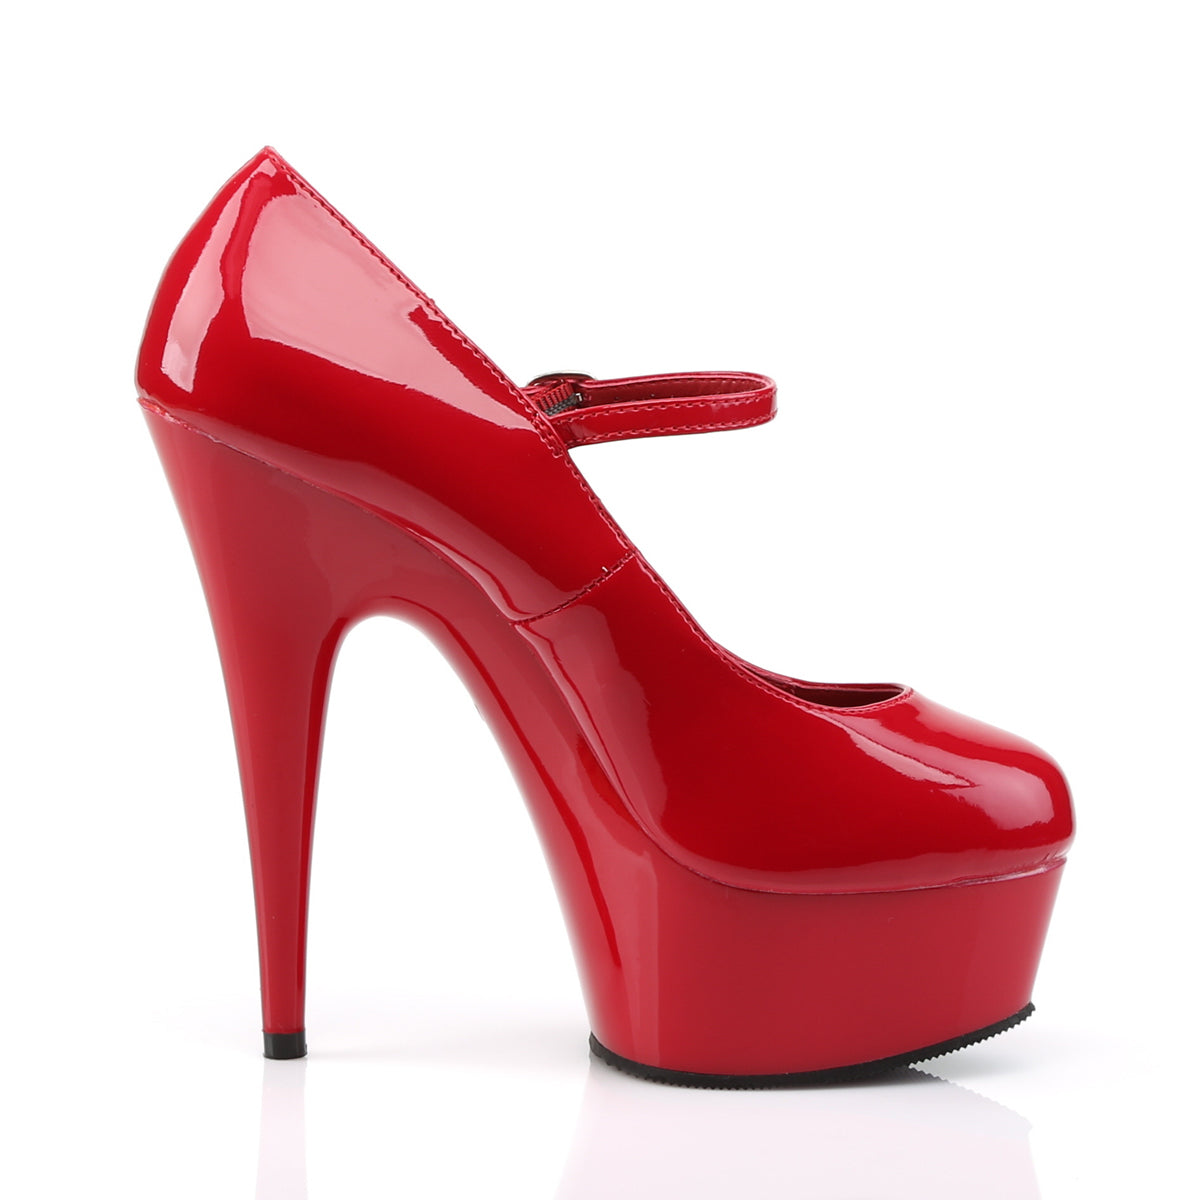 DELIGHT-687 Pleaser 6 Inch Heel Red Pole Dancing Platforms-Pleaser- Sexy Shoes Fetish Heels